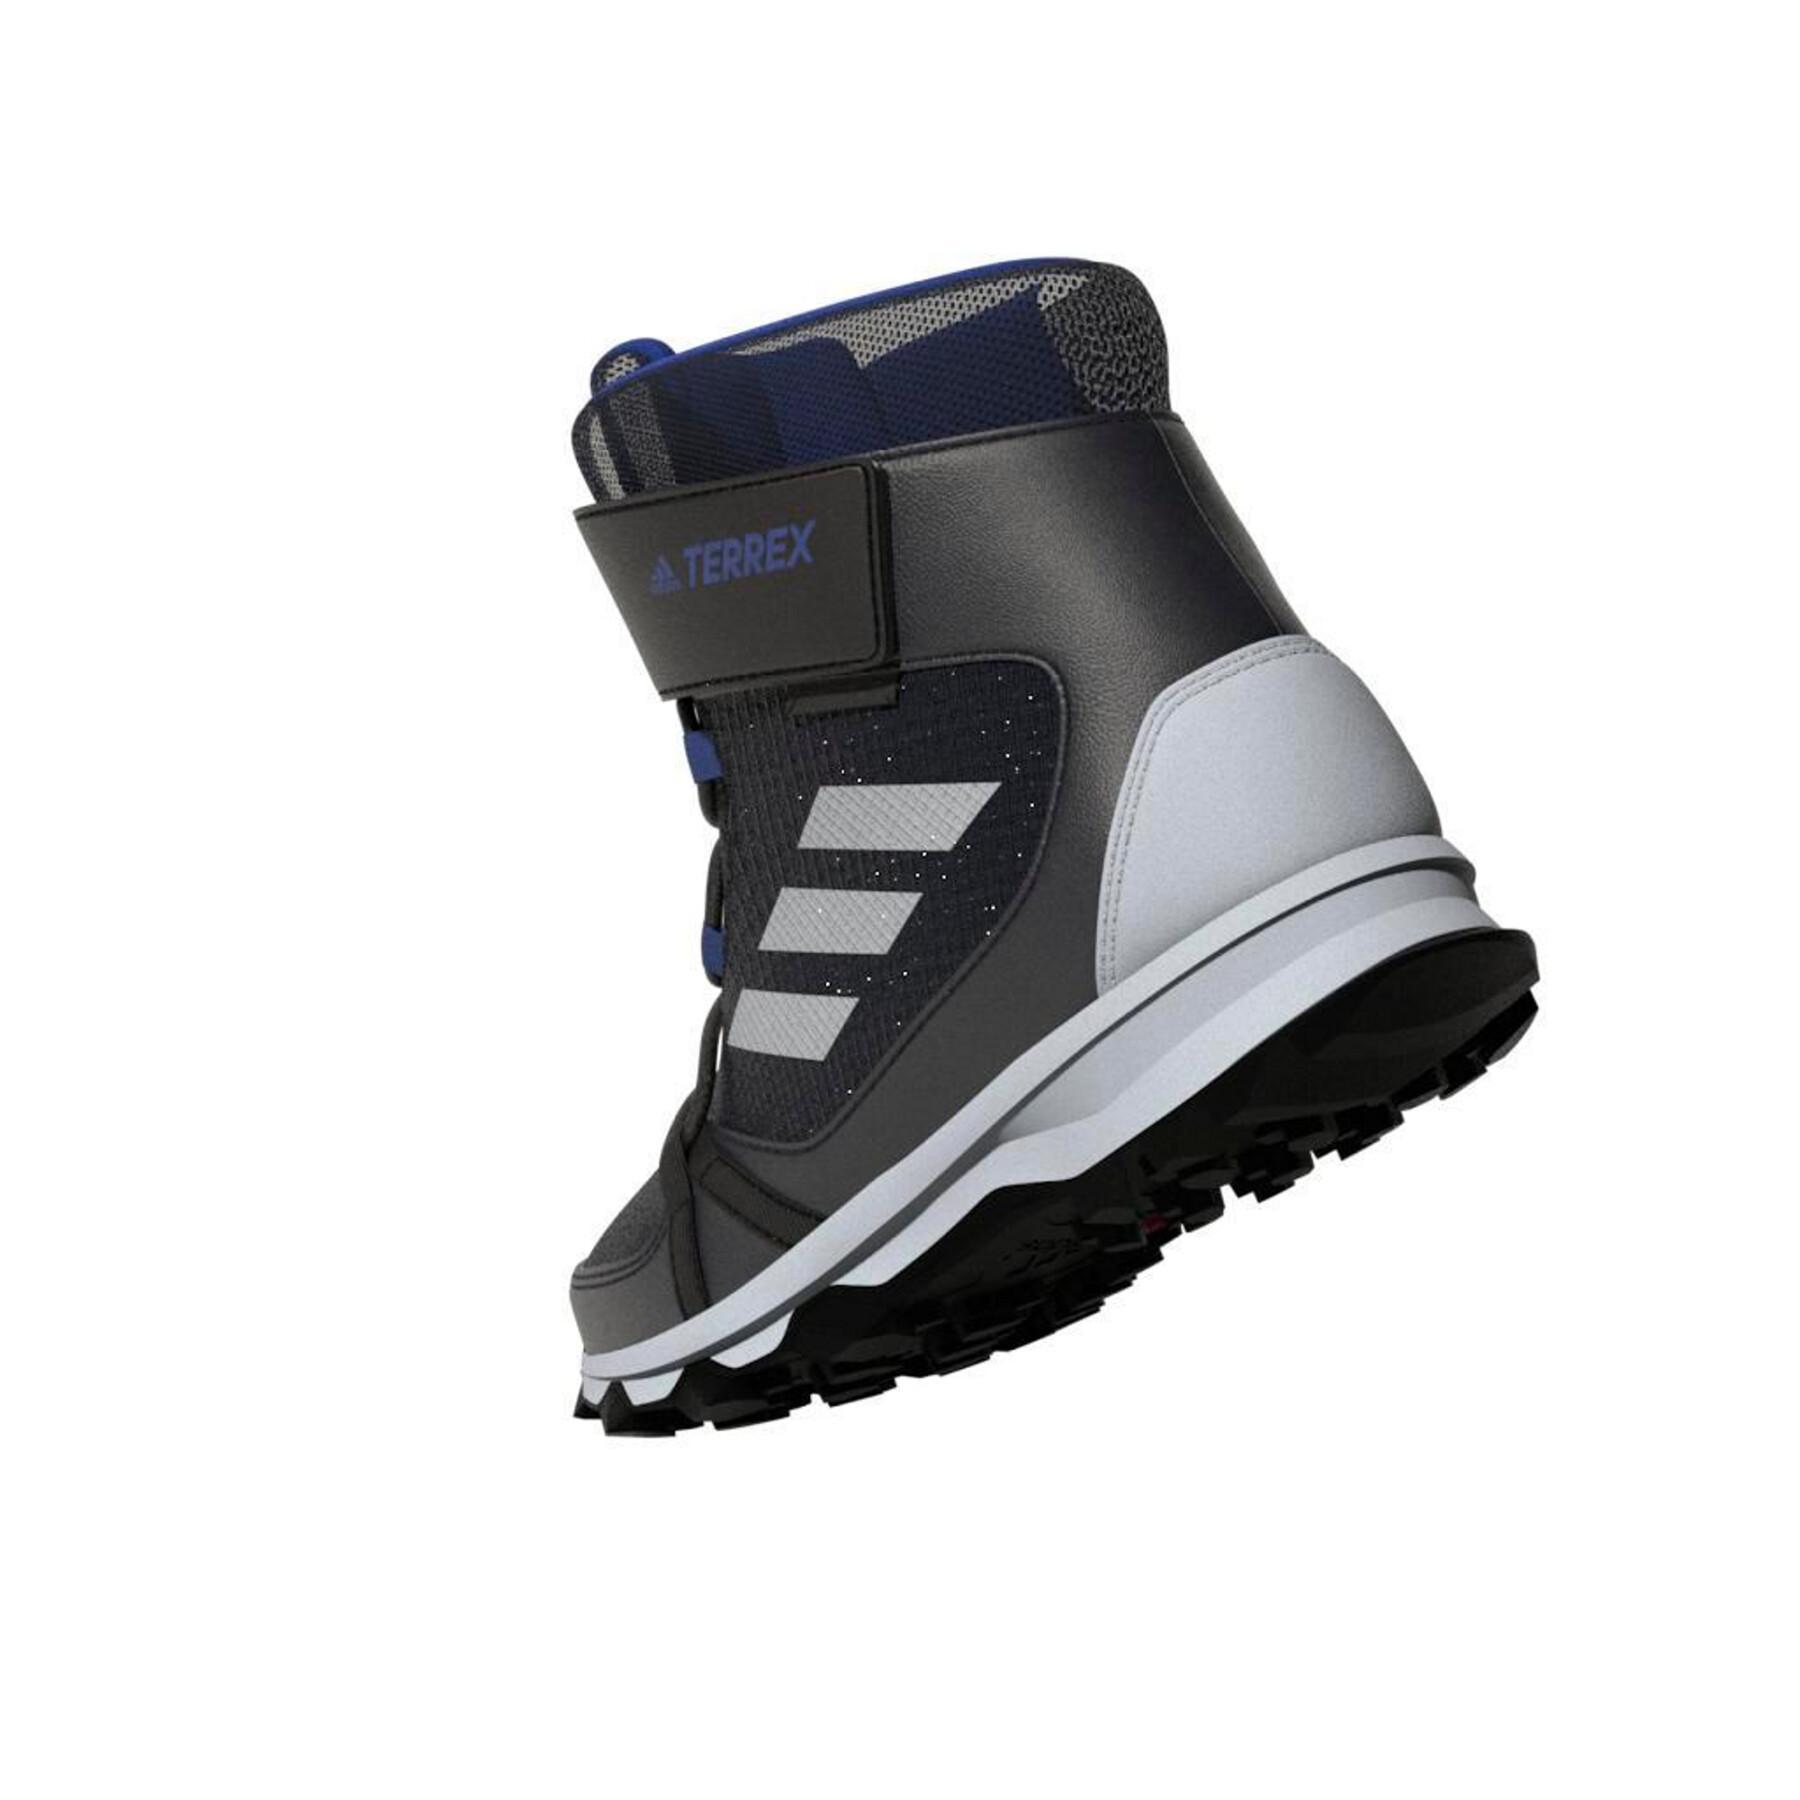 Children's hiking shoes adidas Terrex Snow CF Winter